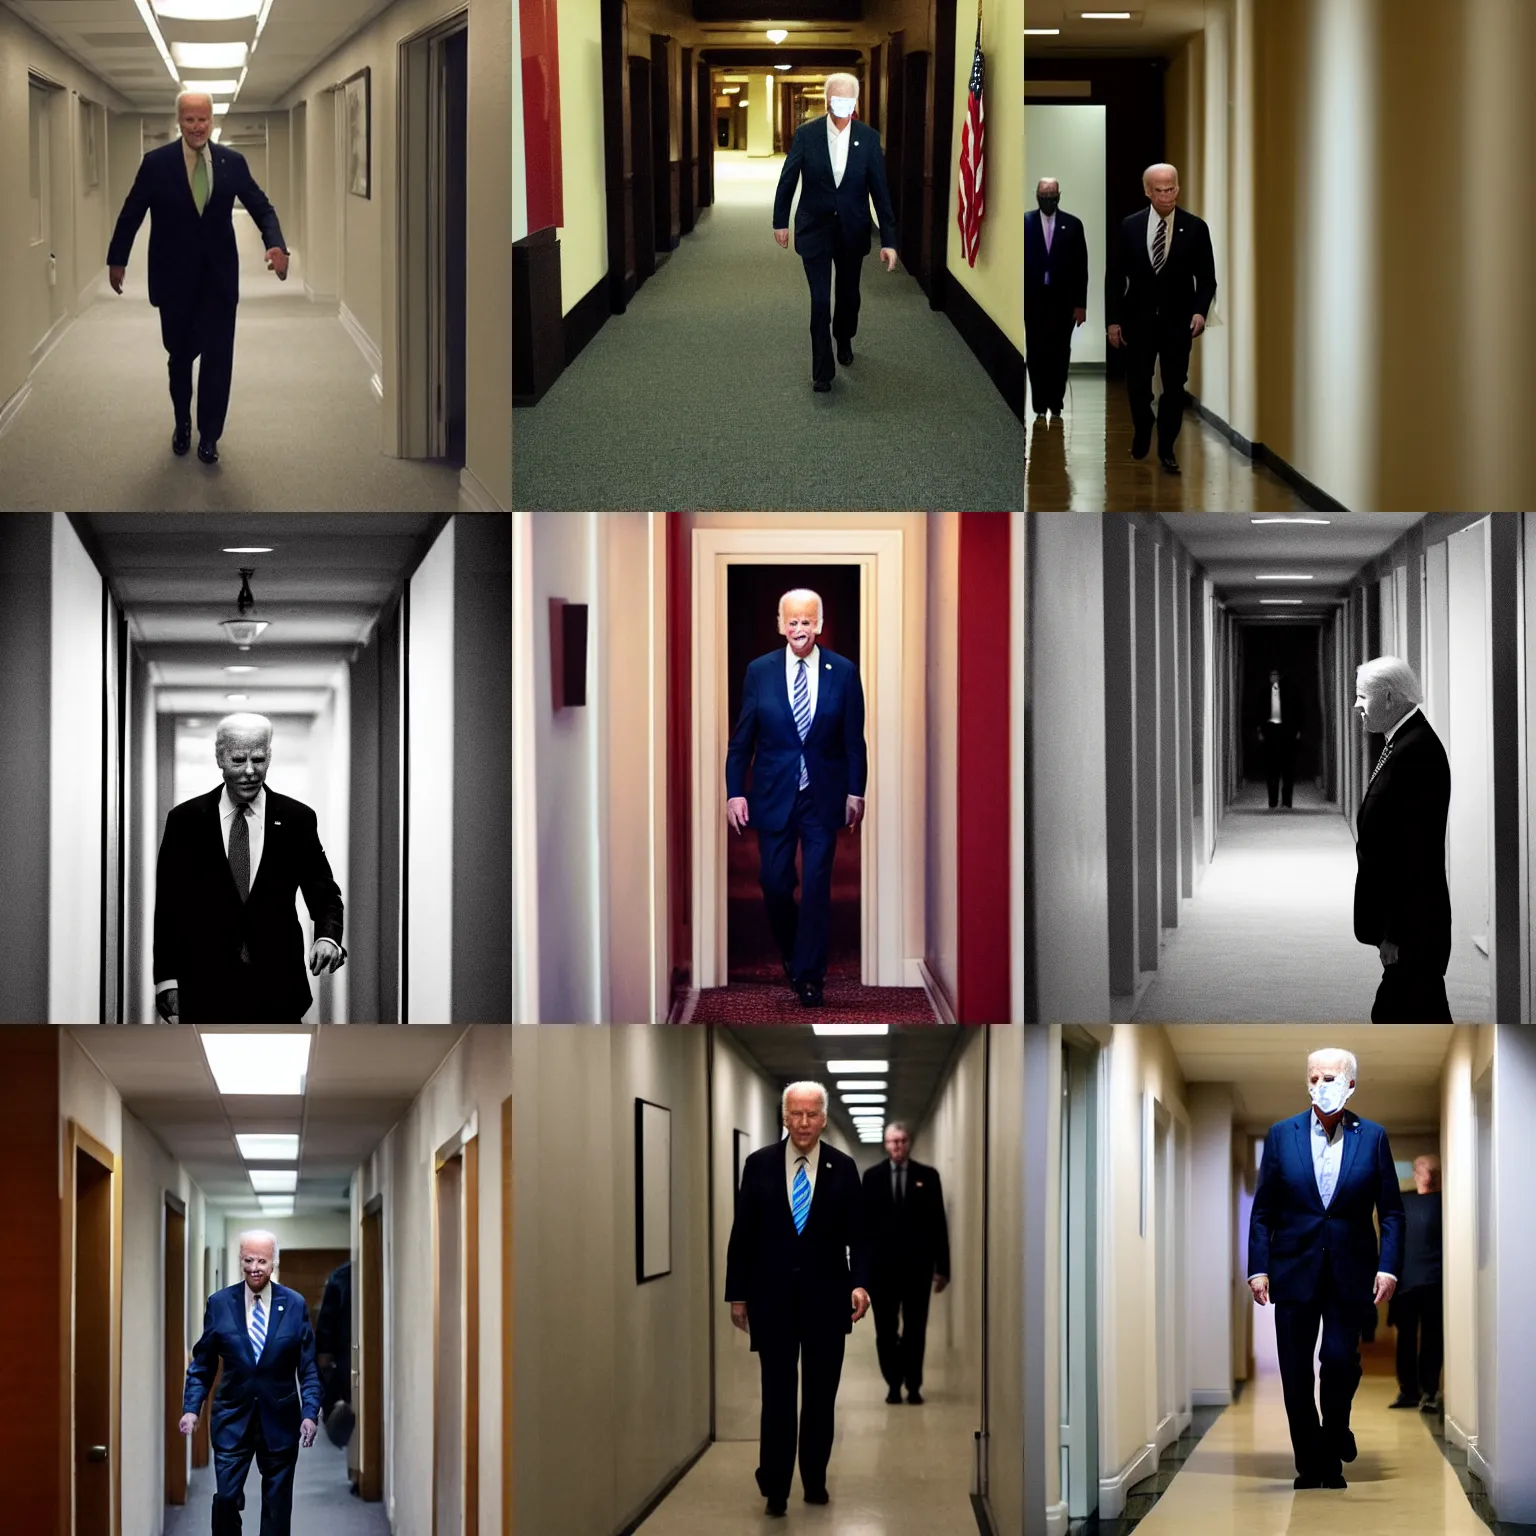 Prompt: undead joe biden walking down a hallway, creepy lighting